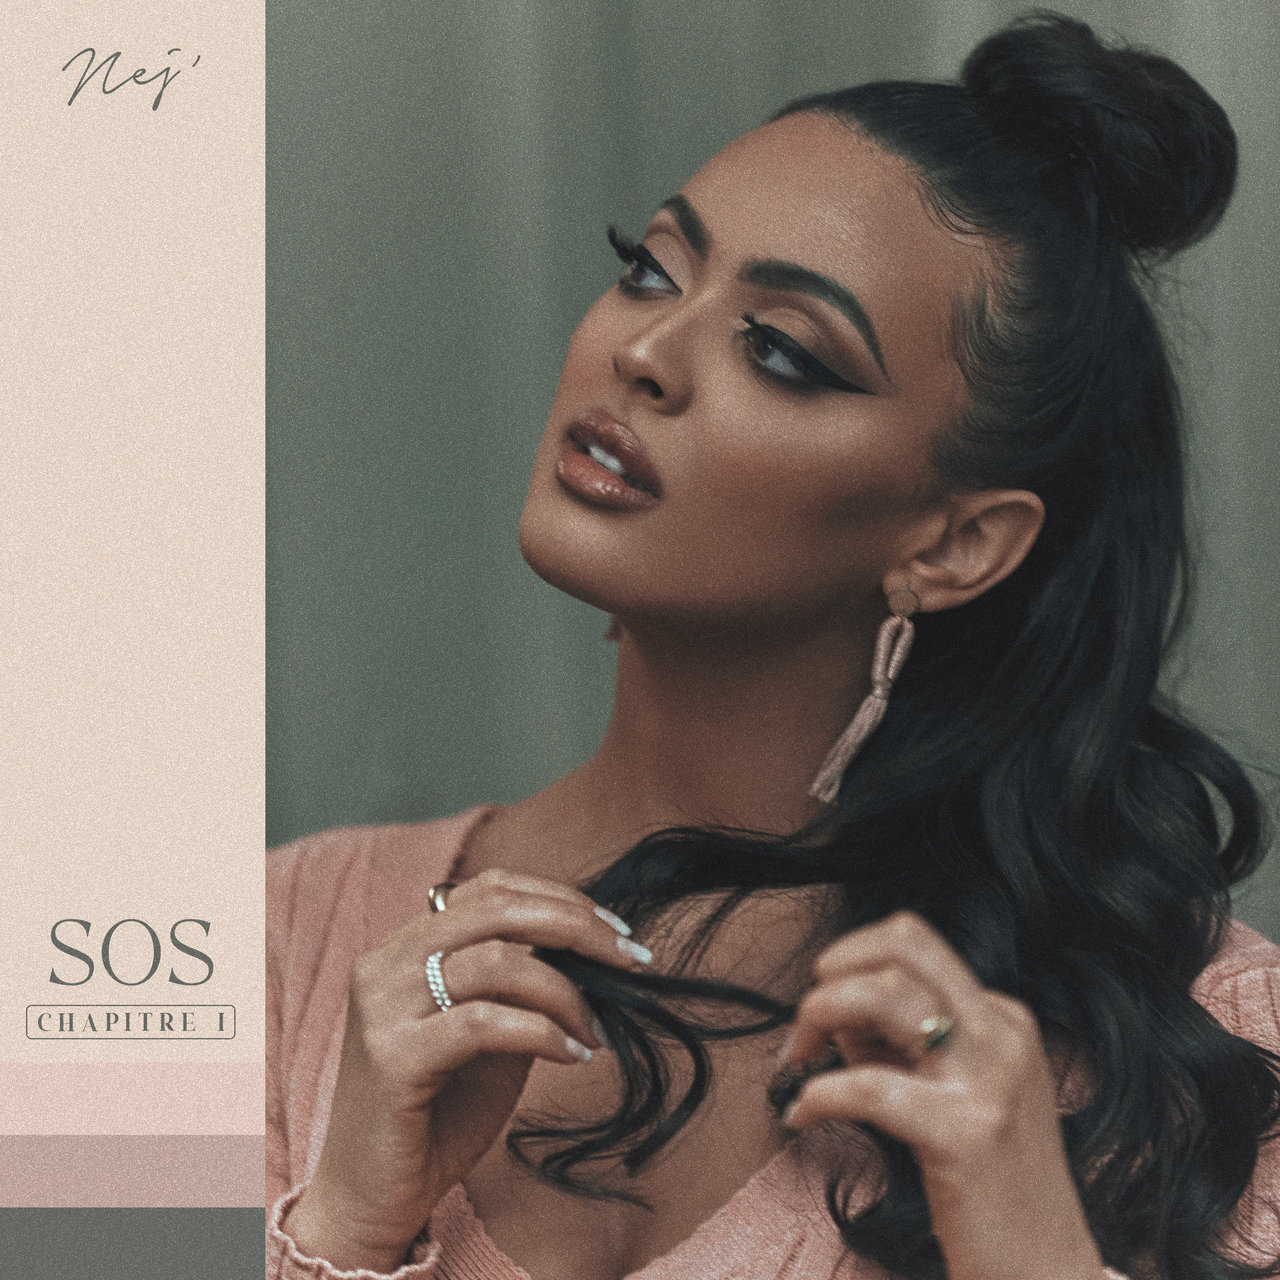 Nej' - SOS (Chapitre 1) (Cover)